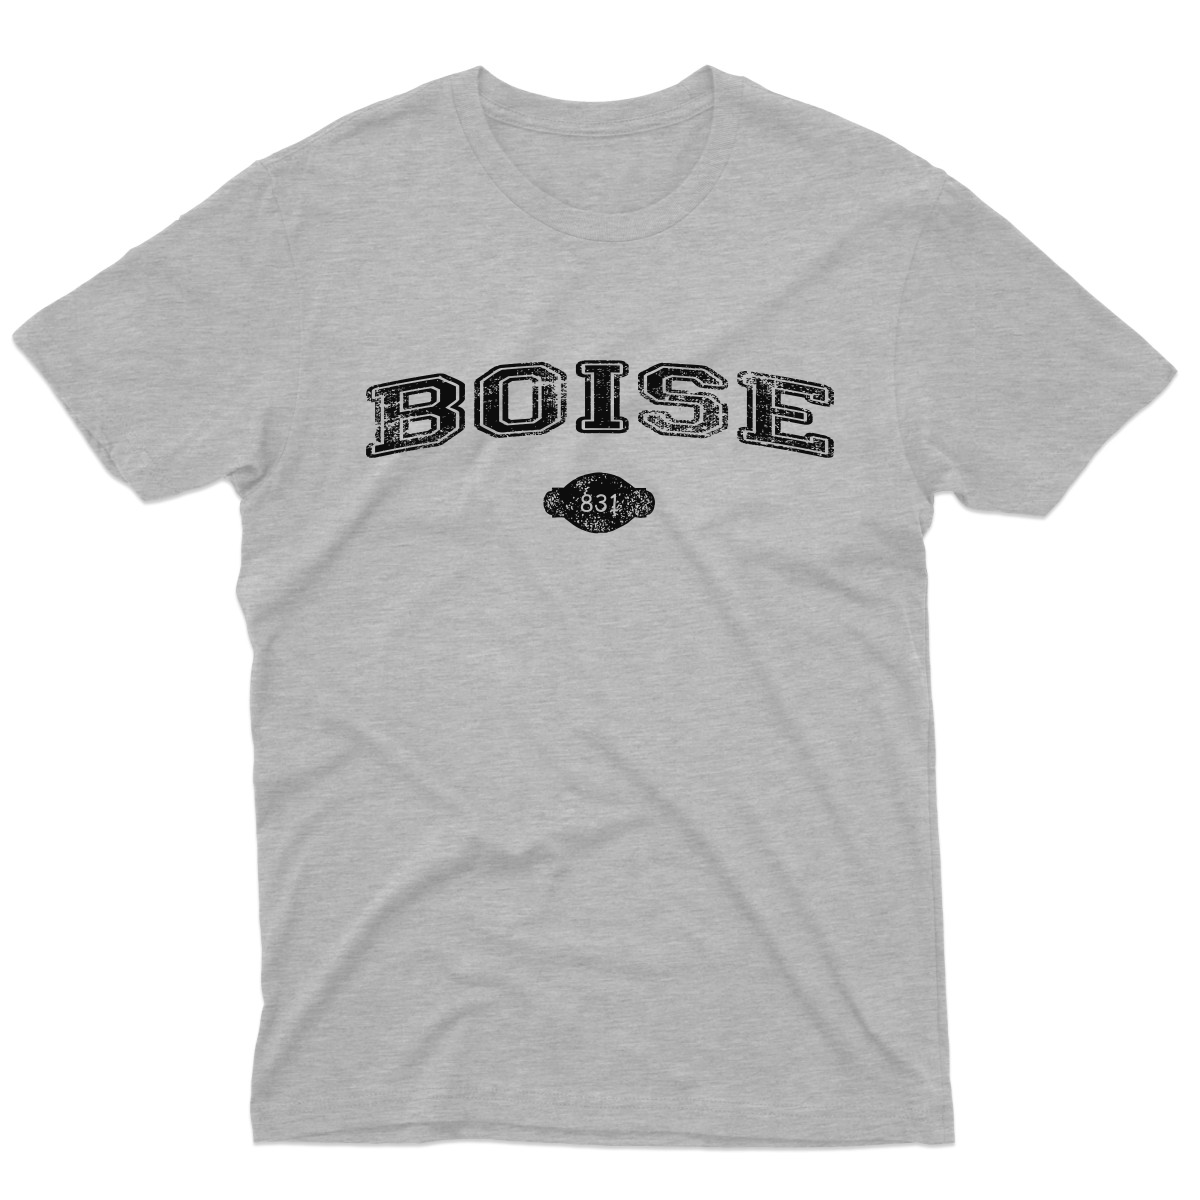 Boise 1863 Represent Men's T-shirt | Gray